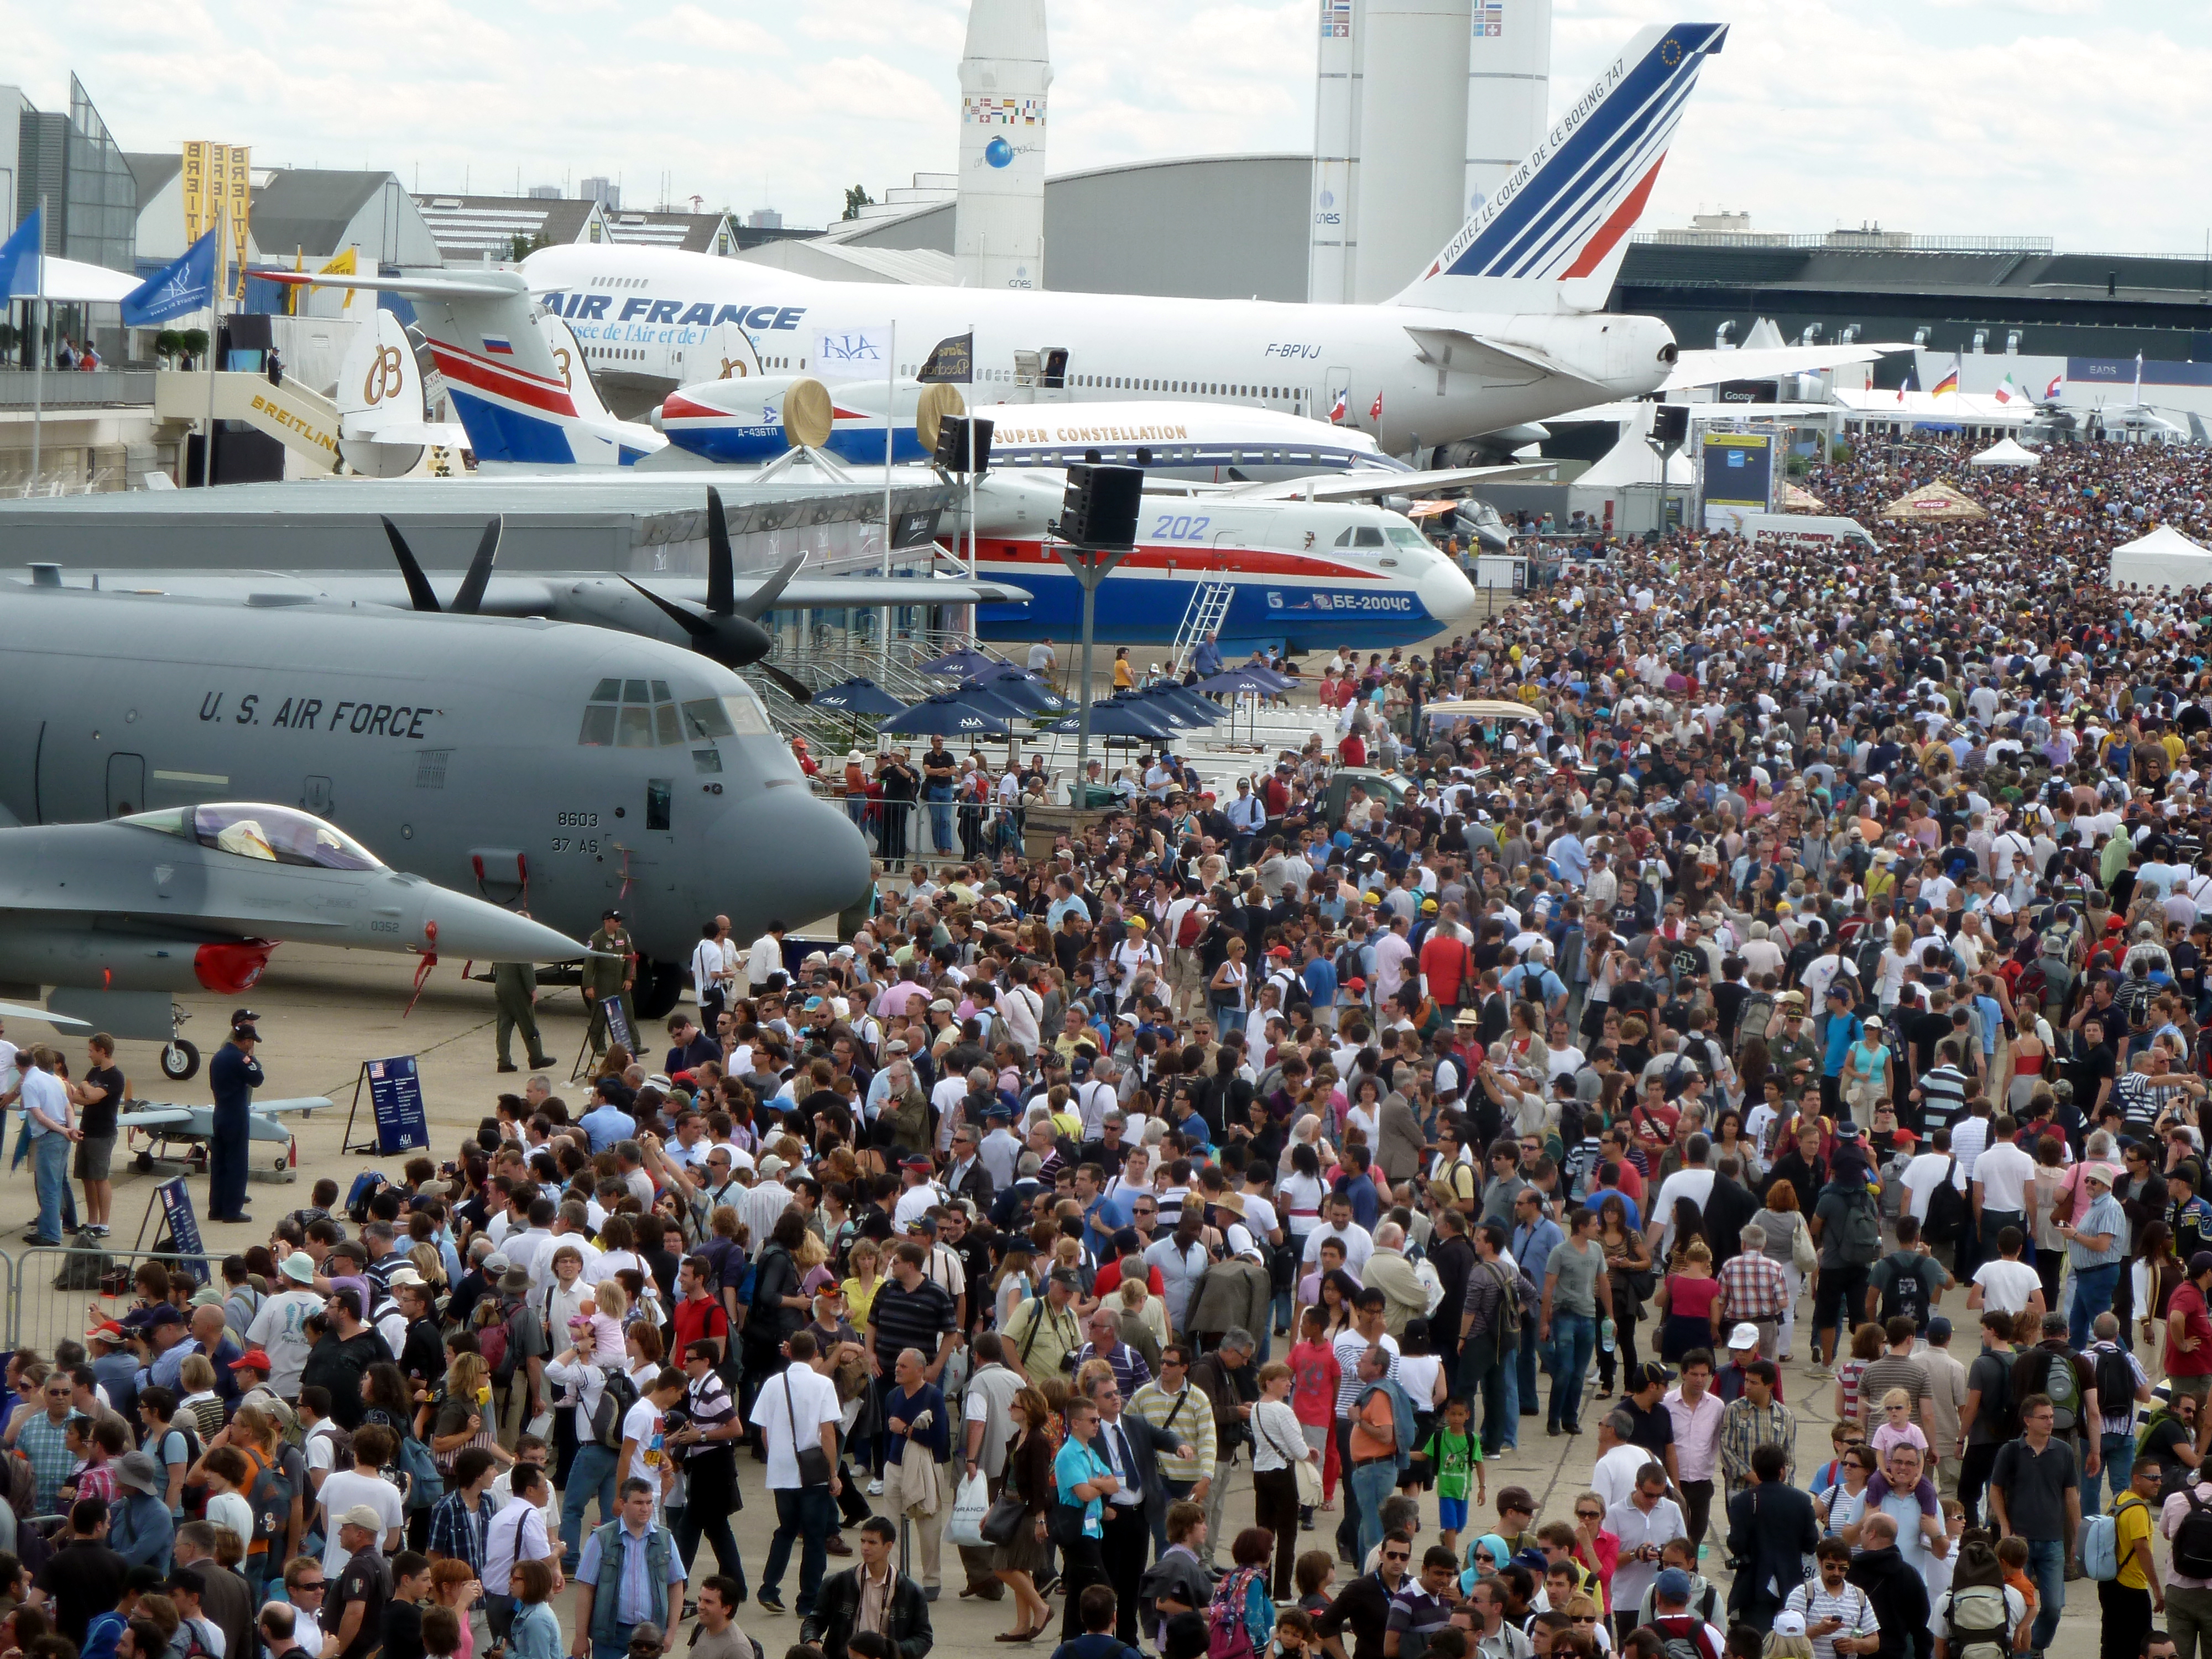 Thousands admire U.S. aircraft at Paris Air Show > Air Force > Article